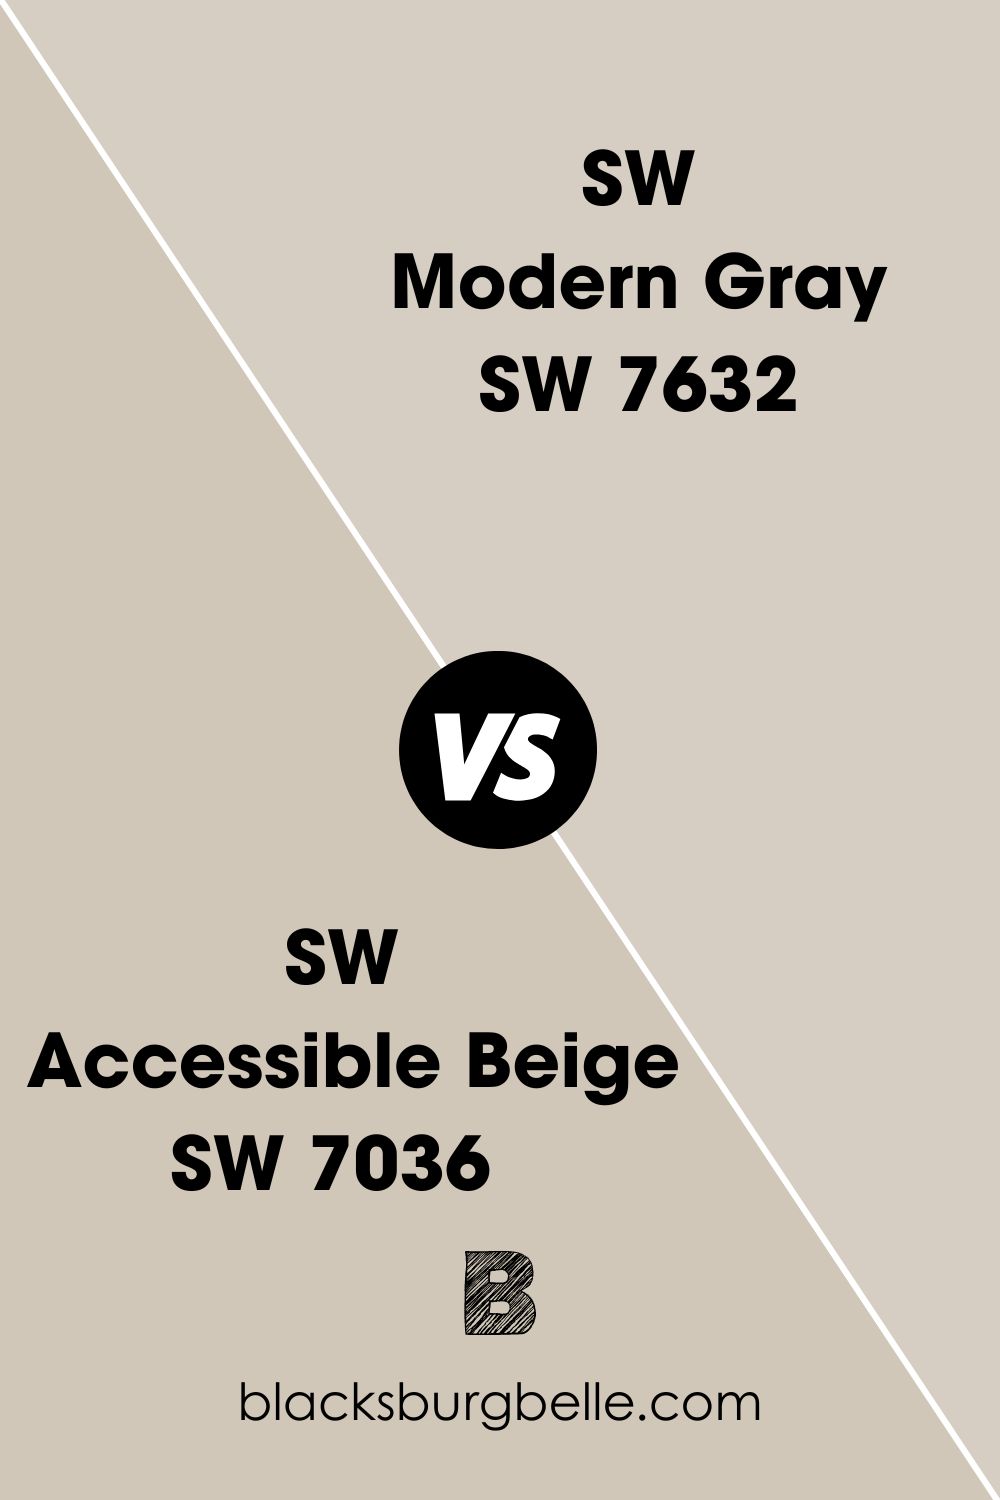 SW Modern Gray vs SW Accessible Beige